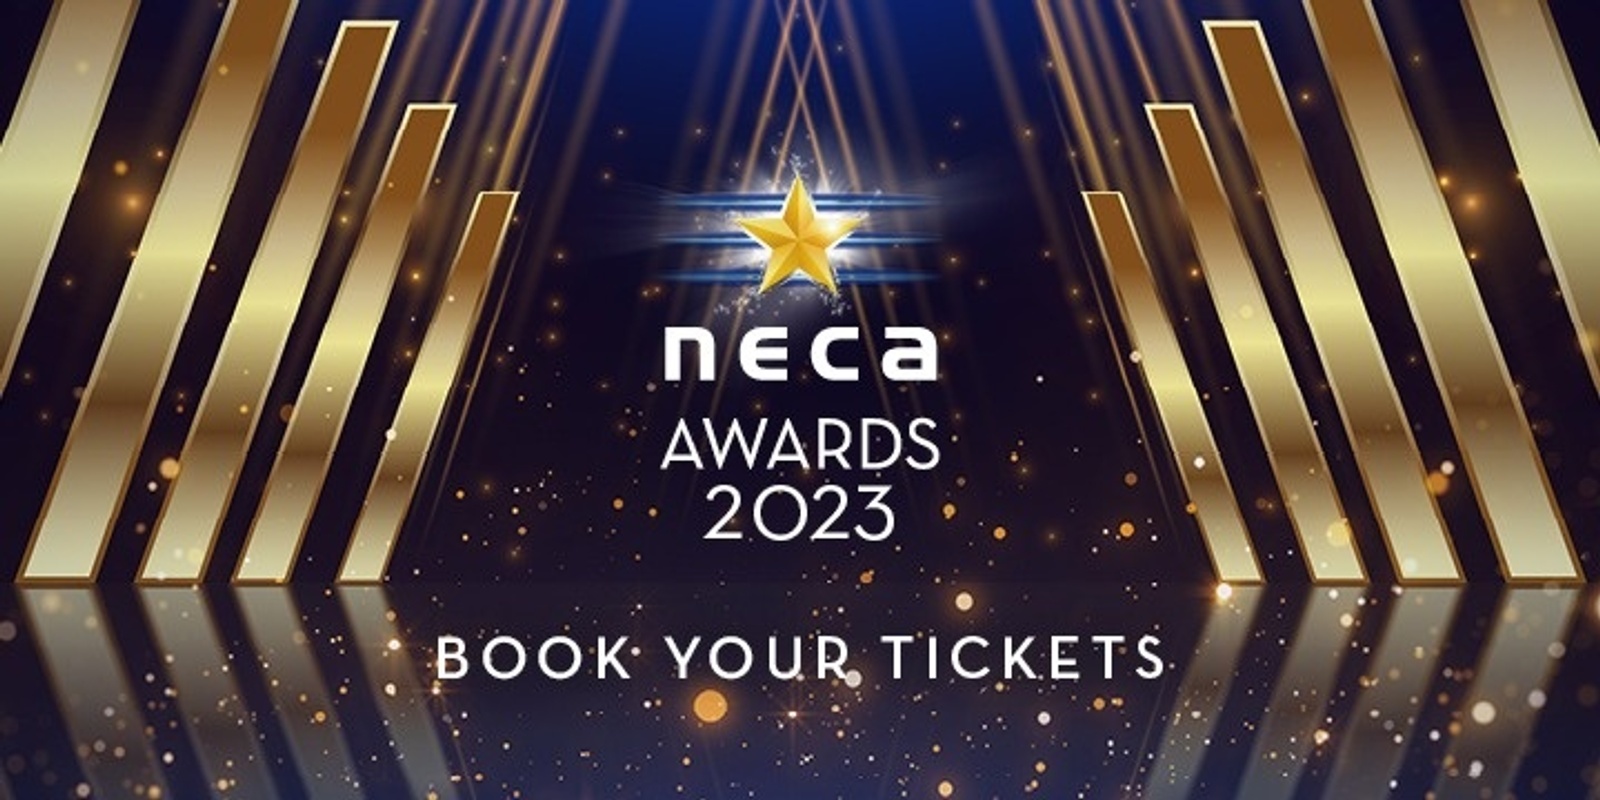 NECA Awards 2023 Humanitix